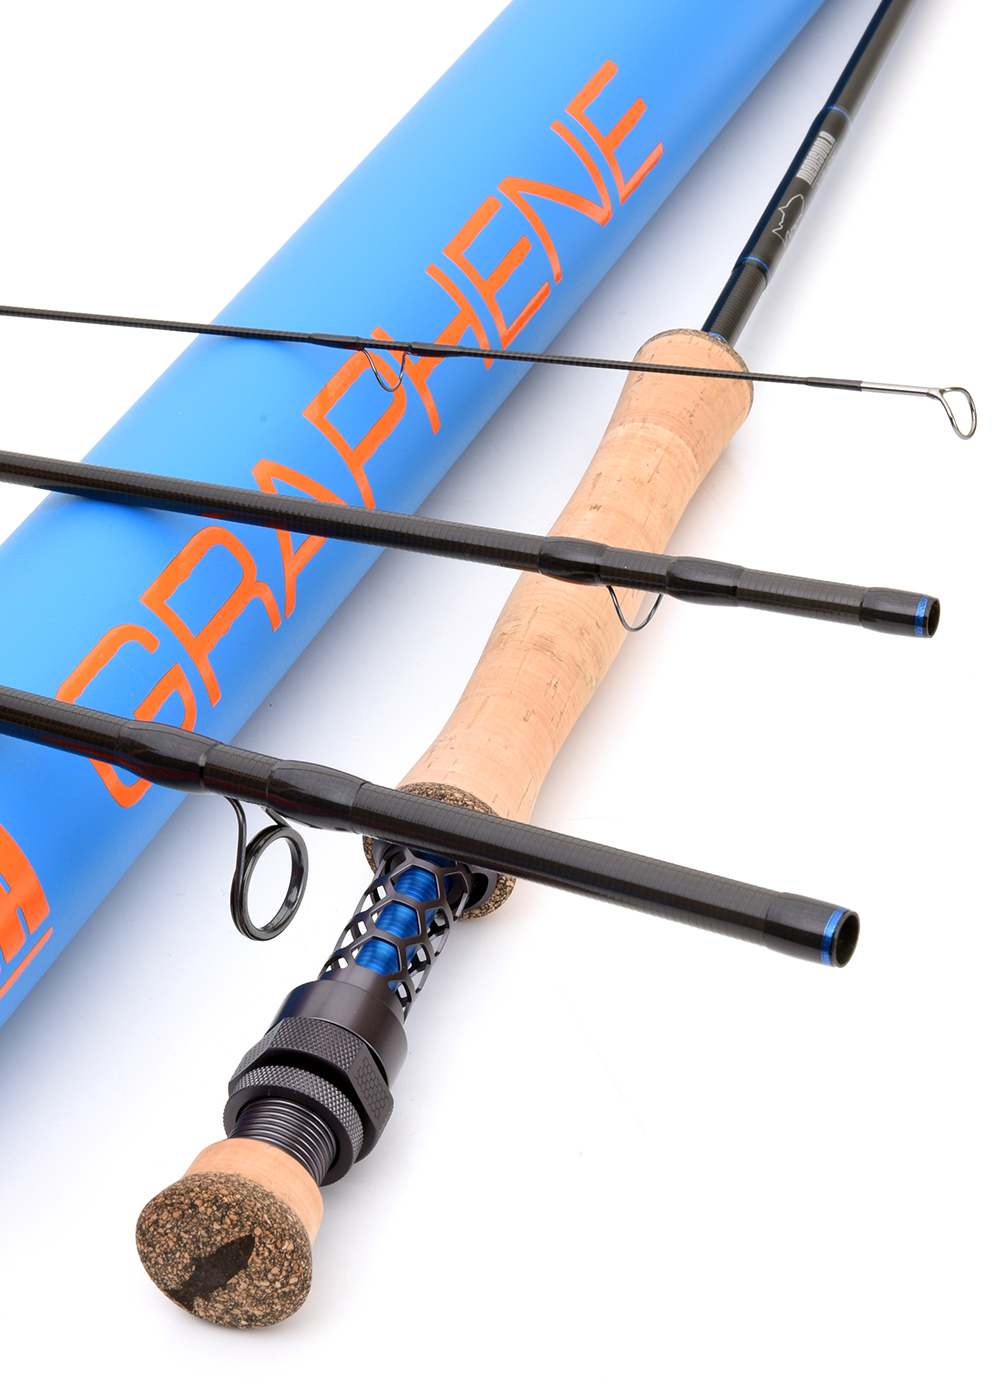 Vision Merisuola Graphene Fly Rod 9 Foot #6 For Fly Fishing (Length 9ft / 2.75m)